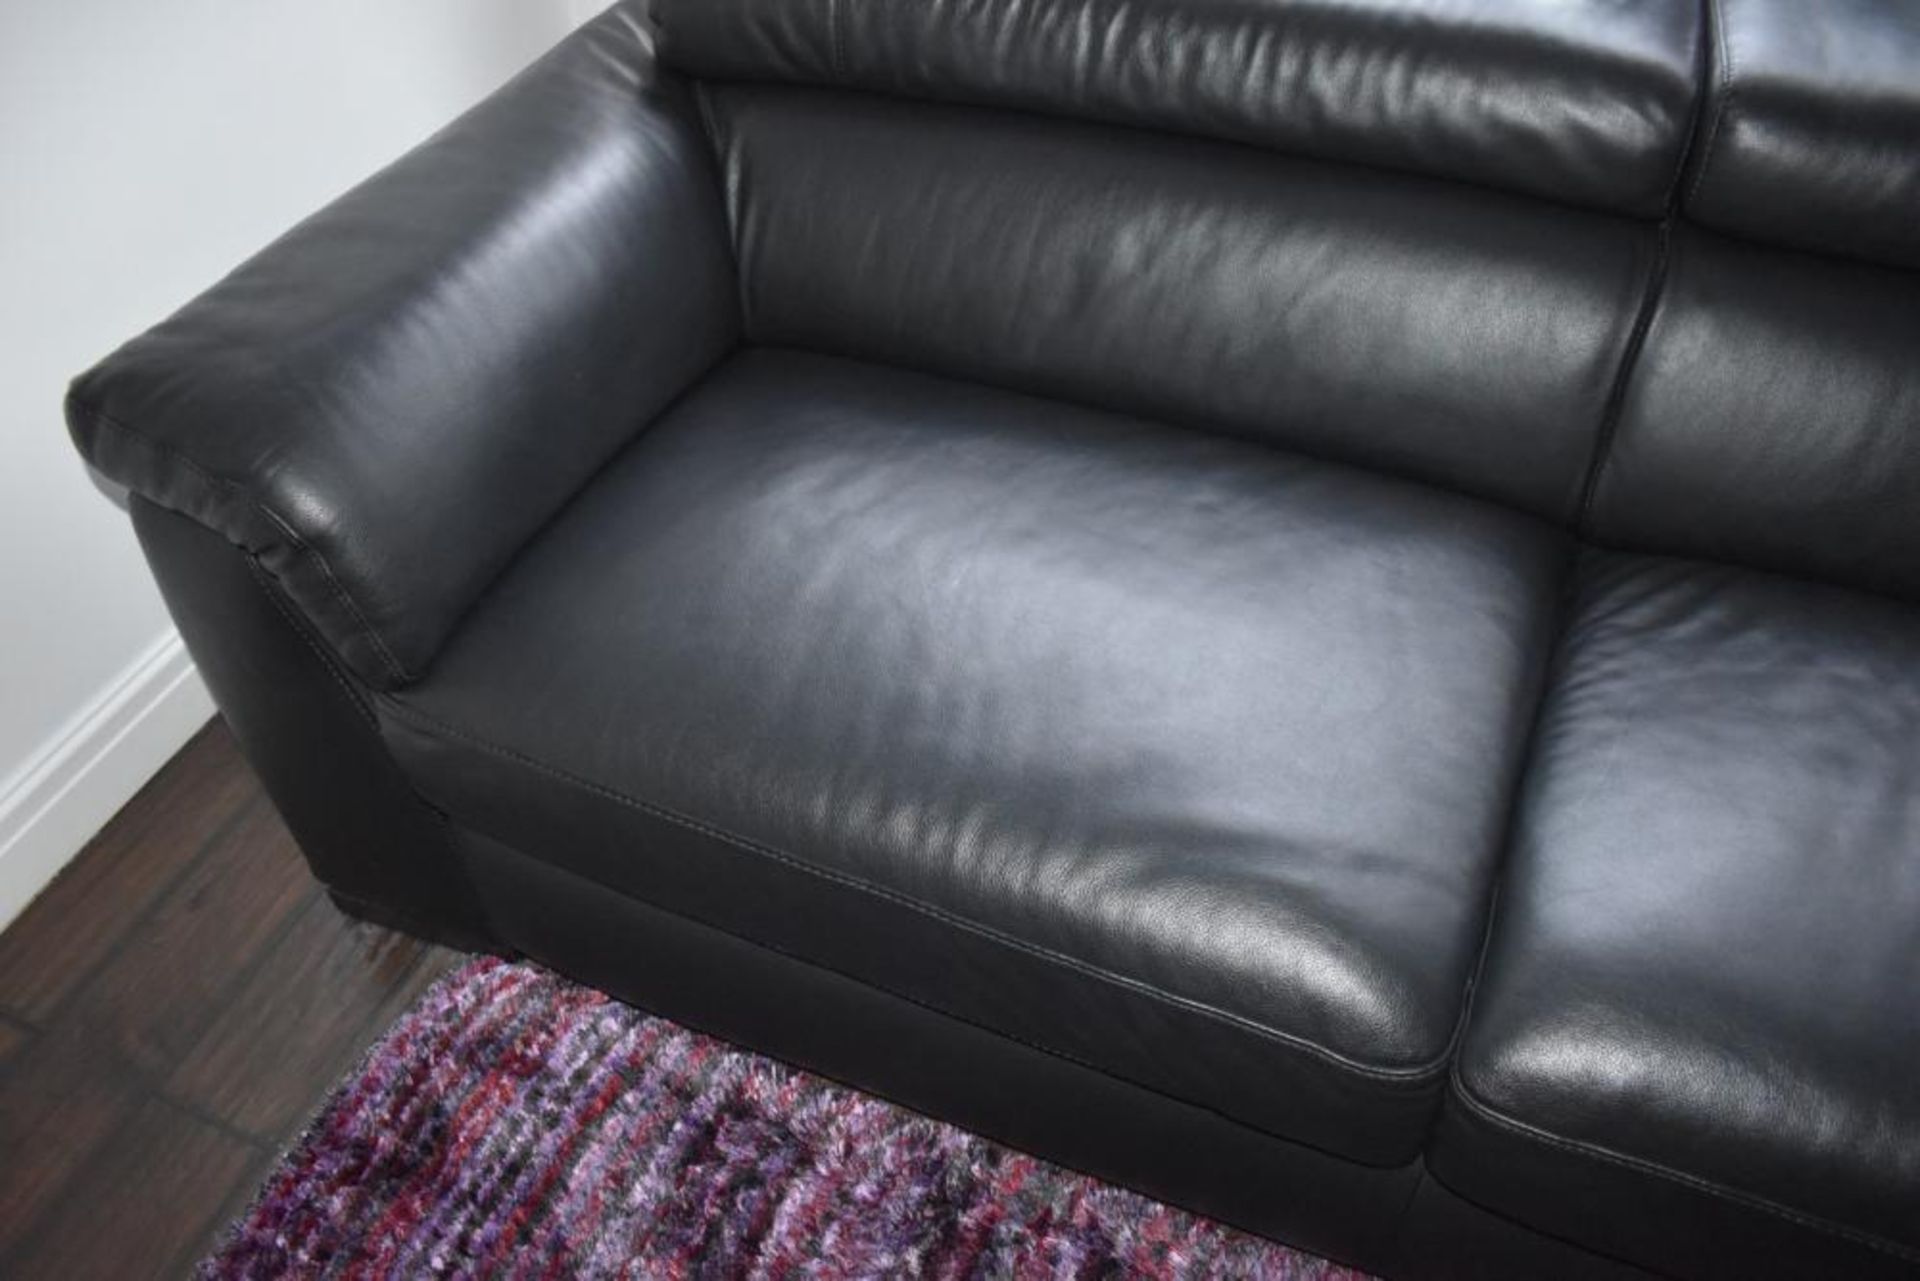 1 x Italsofa by Natuzzi Black Leather Sofa with 2 Purple DreamWeavers Cushions - CL469 - No VAT - Image 4 of 9